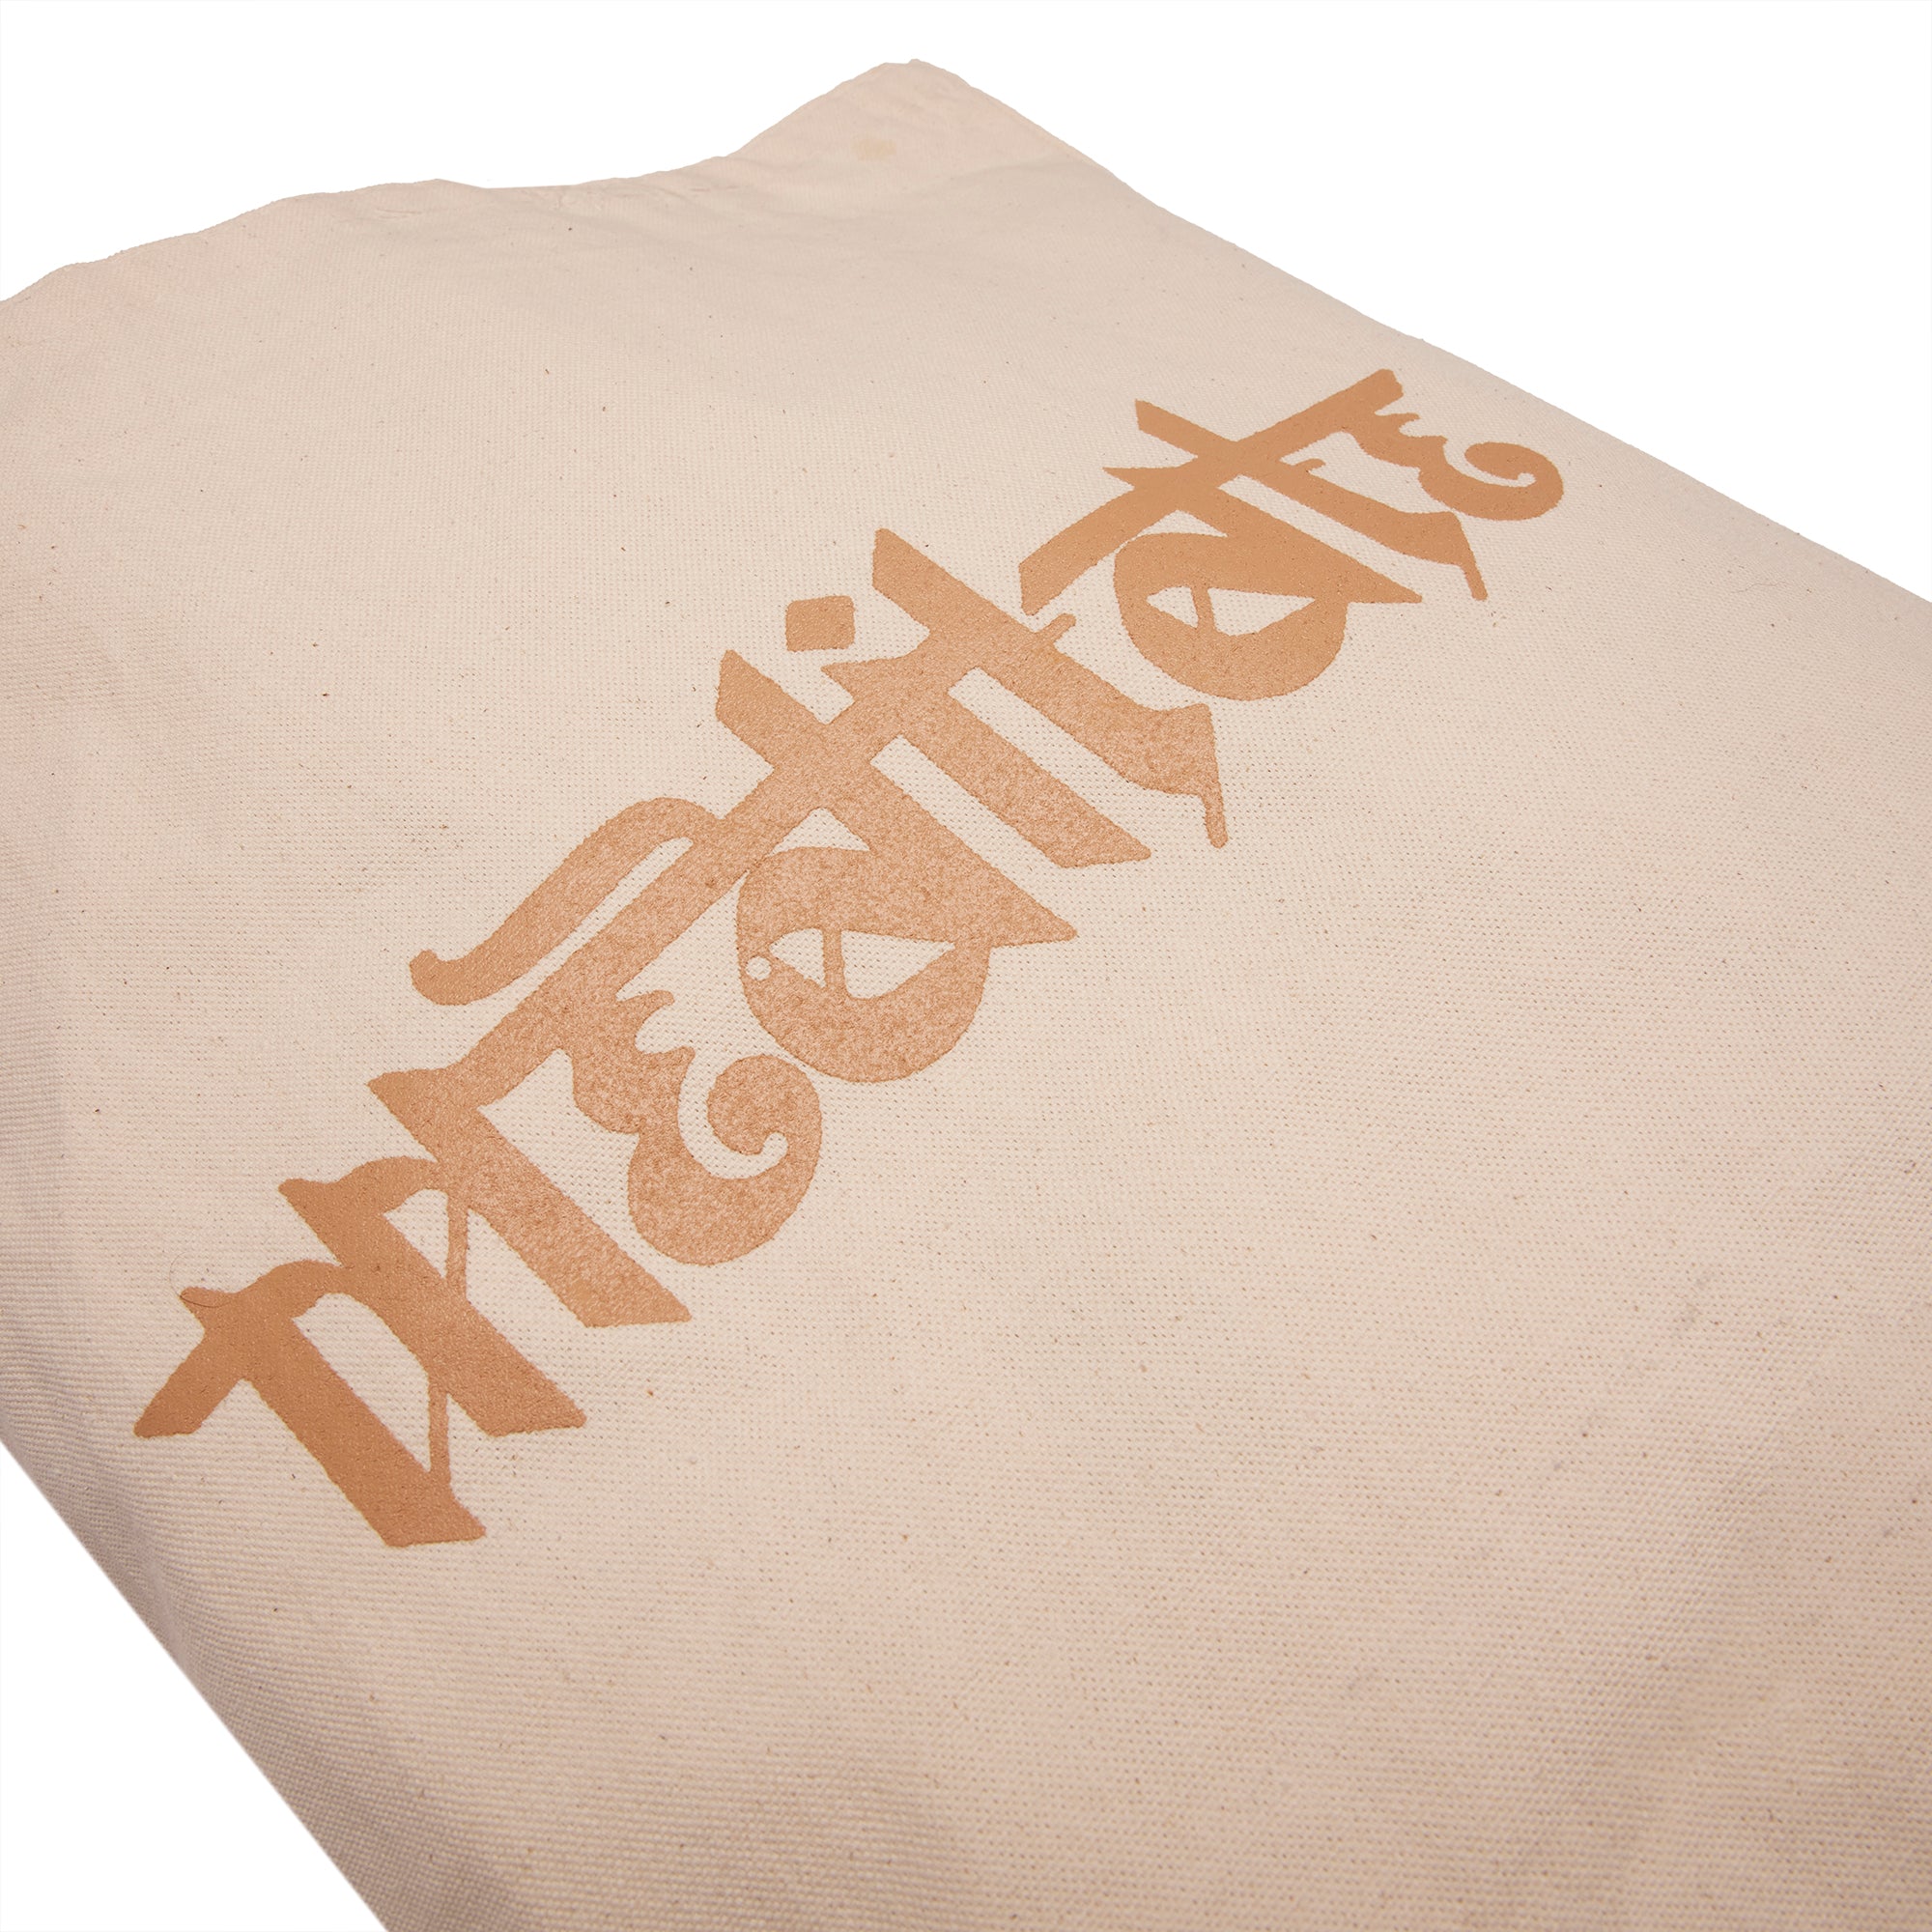 Meditation for the Mind Cruiser Tote Bag - Car Shopping Bag - Word Art Tote  Bag